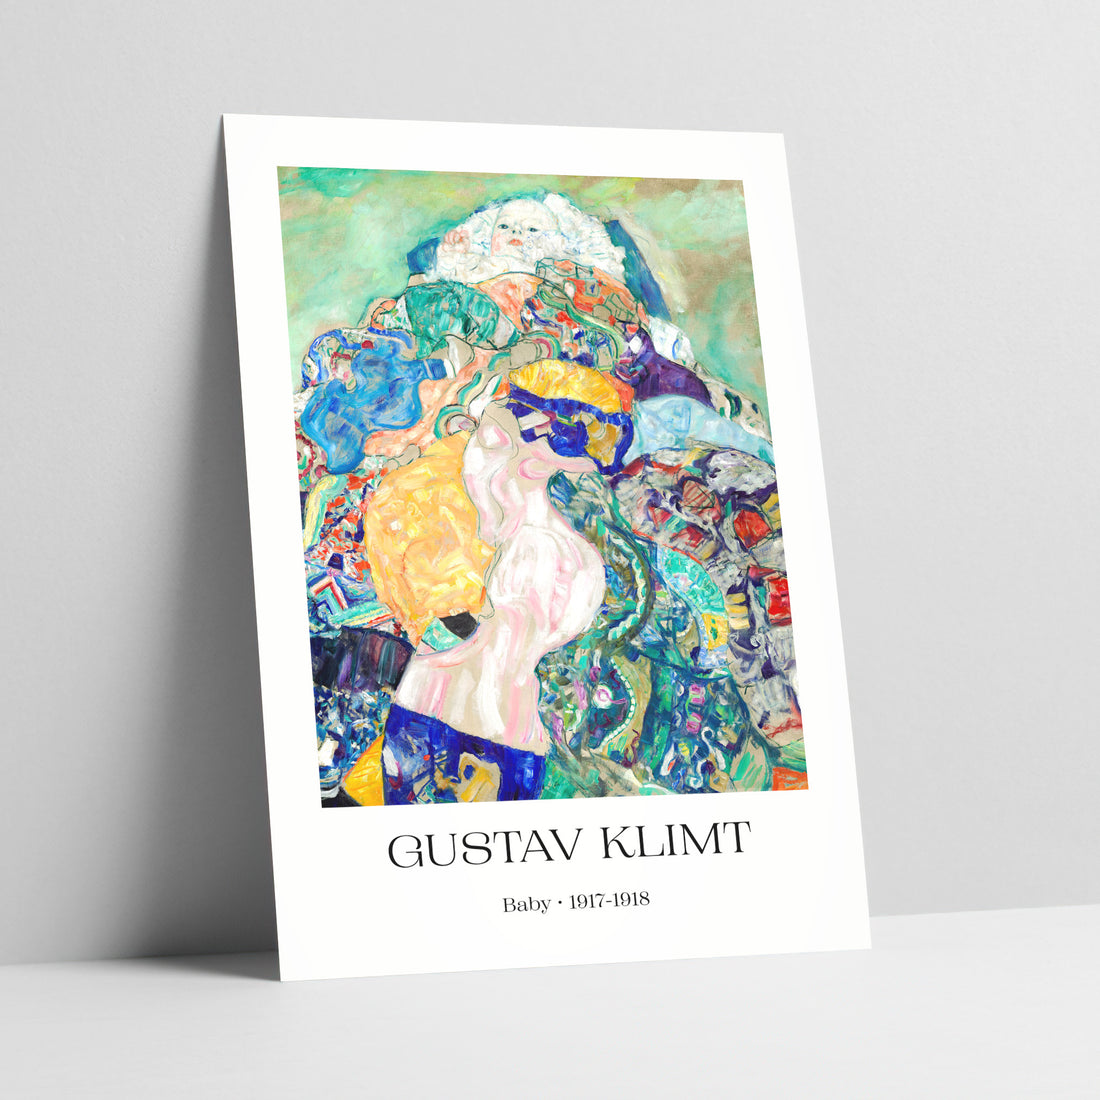 Baby by Gustav Klimt Gallery Art Print